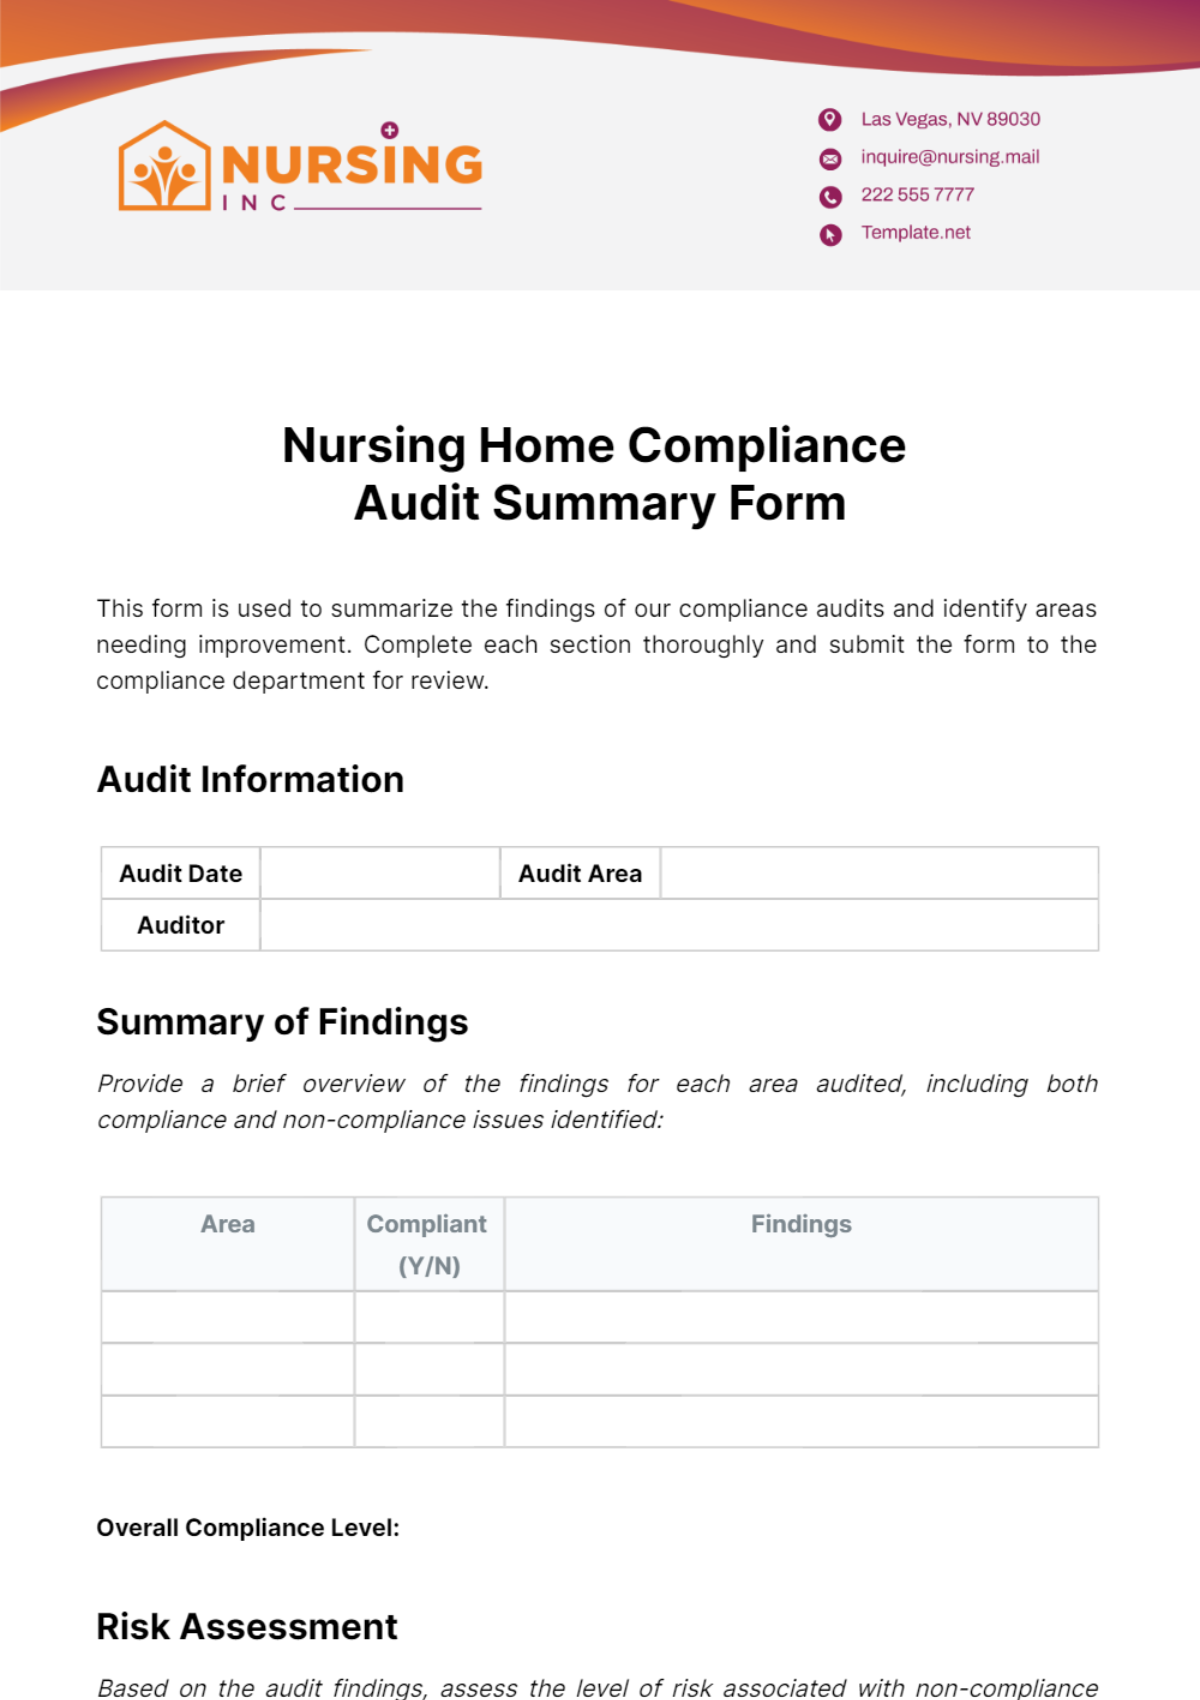 Nursing Home Compliance Audit Summary Form Template